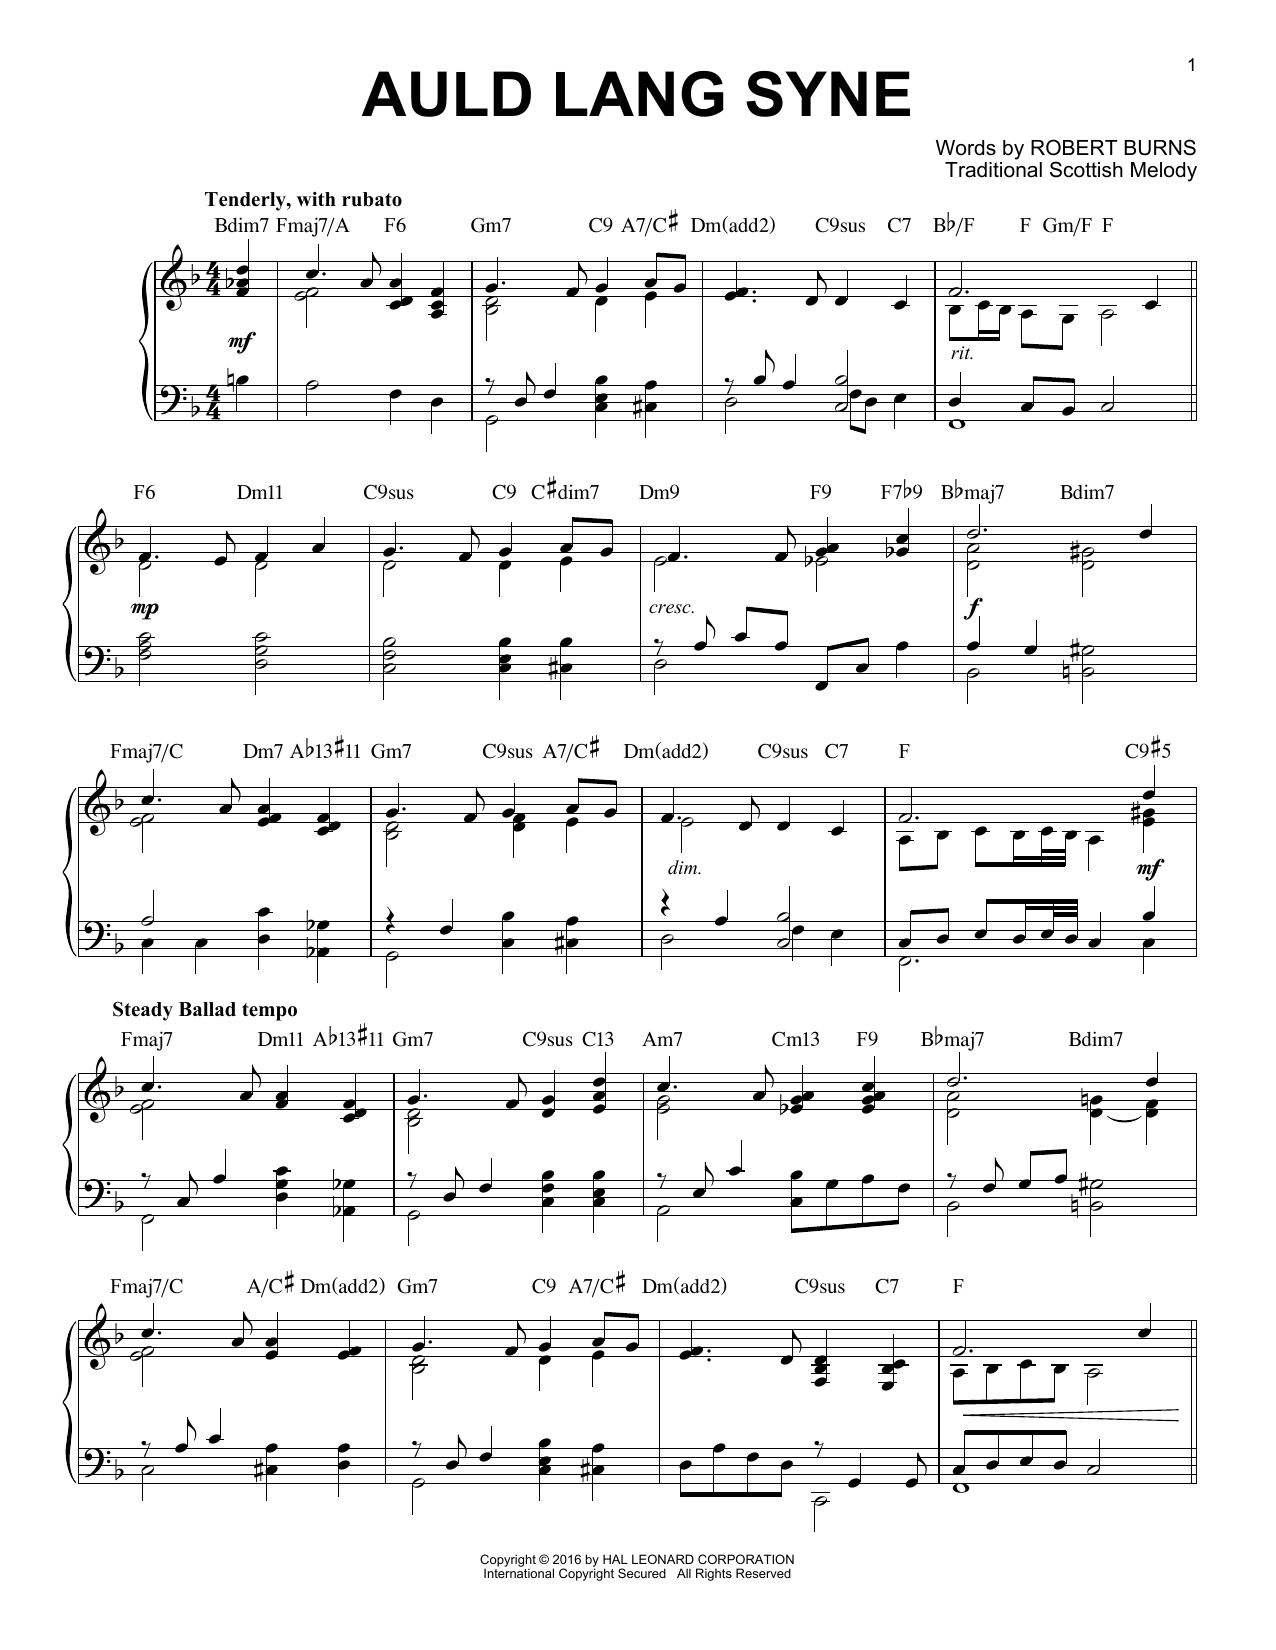 Robert Burns Auld Lang Syne [Jazz version] (arr. Brent Edstrom) Sheet Music Notes & Chords for Piano - Download or Print PDF